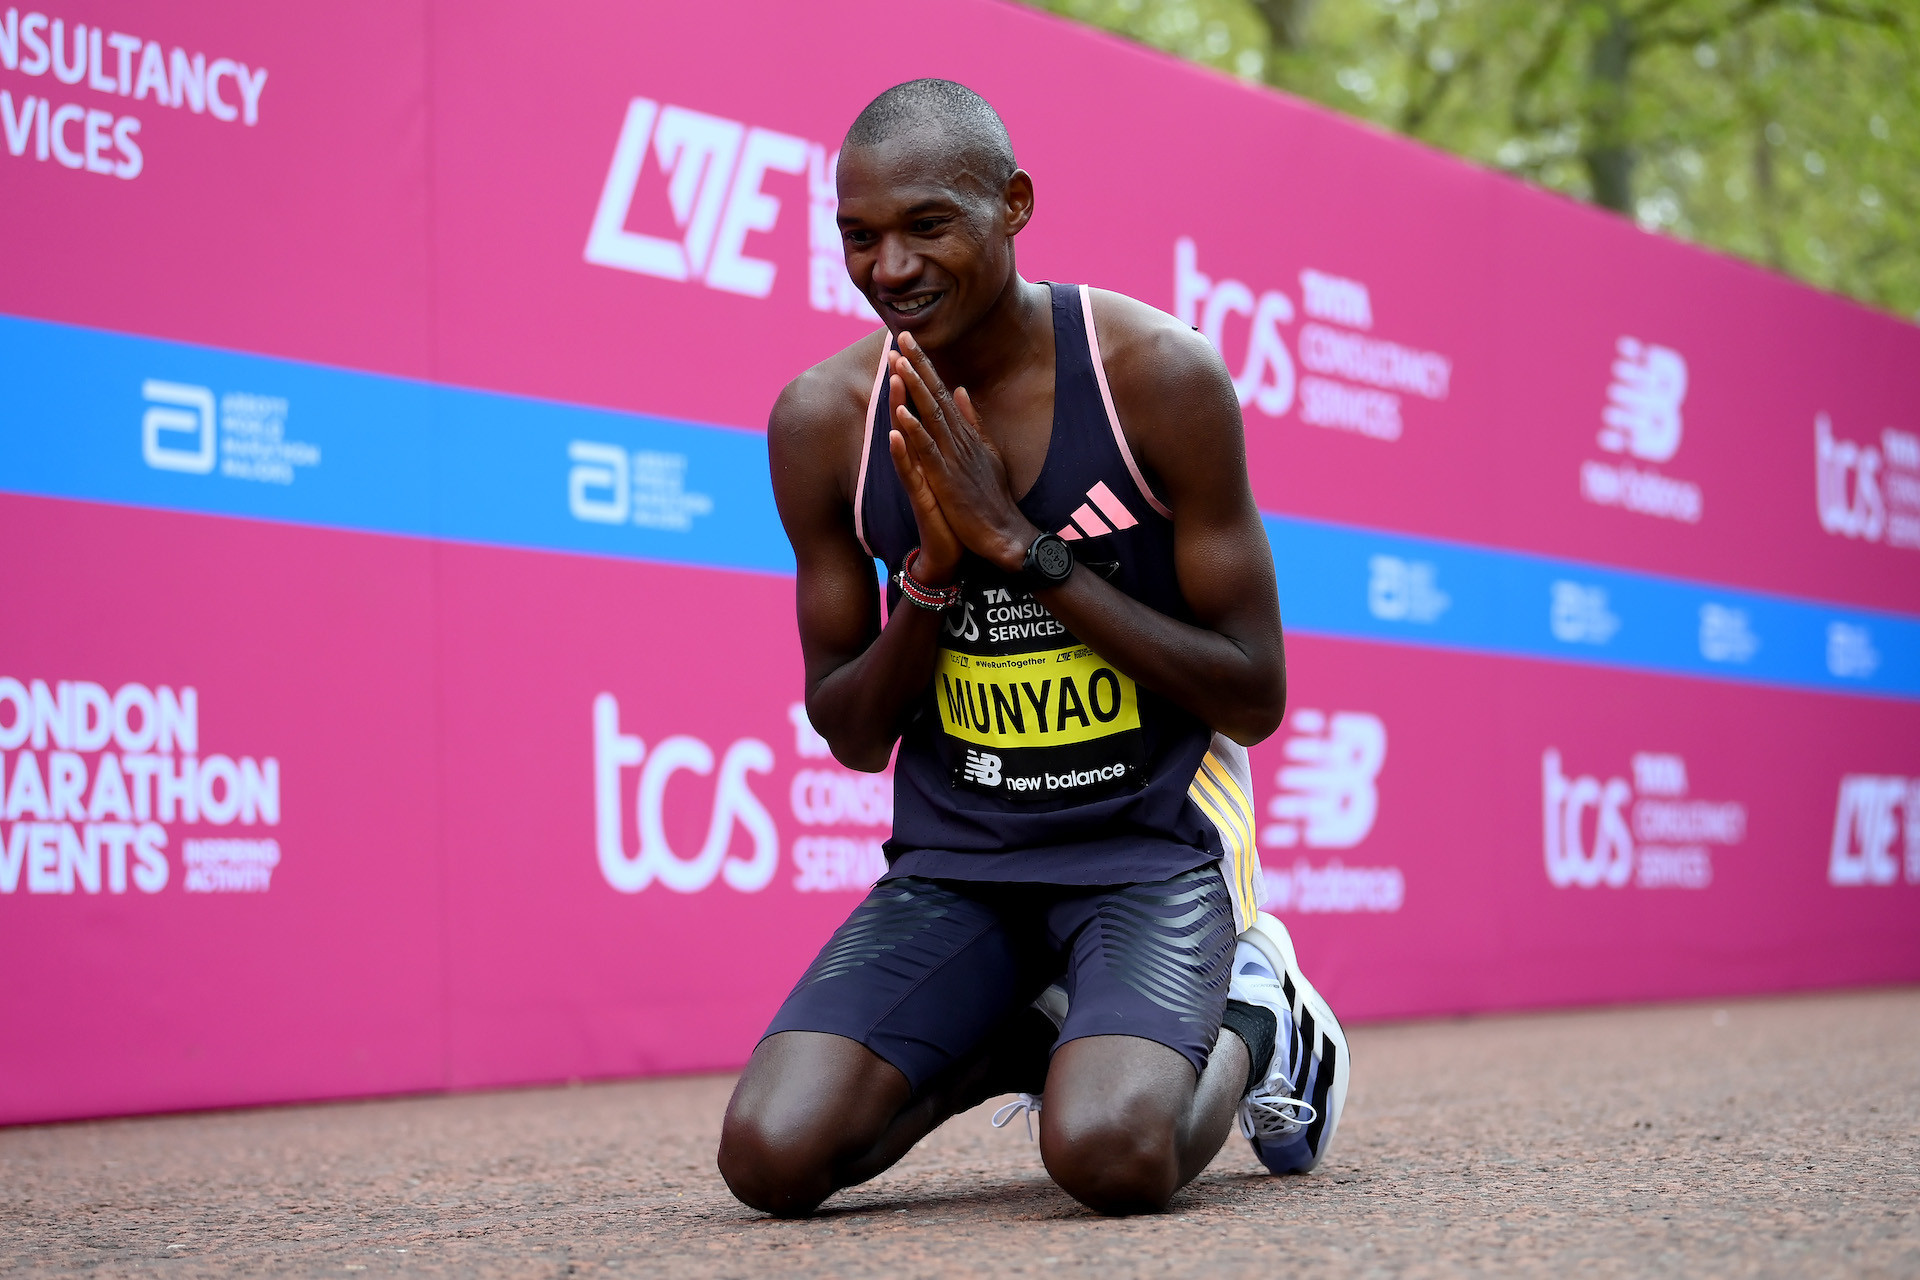 London Marathon Winner Munyao to Represent Kenya in Paris 2024 Olympics ...